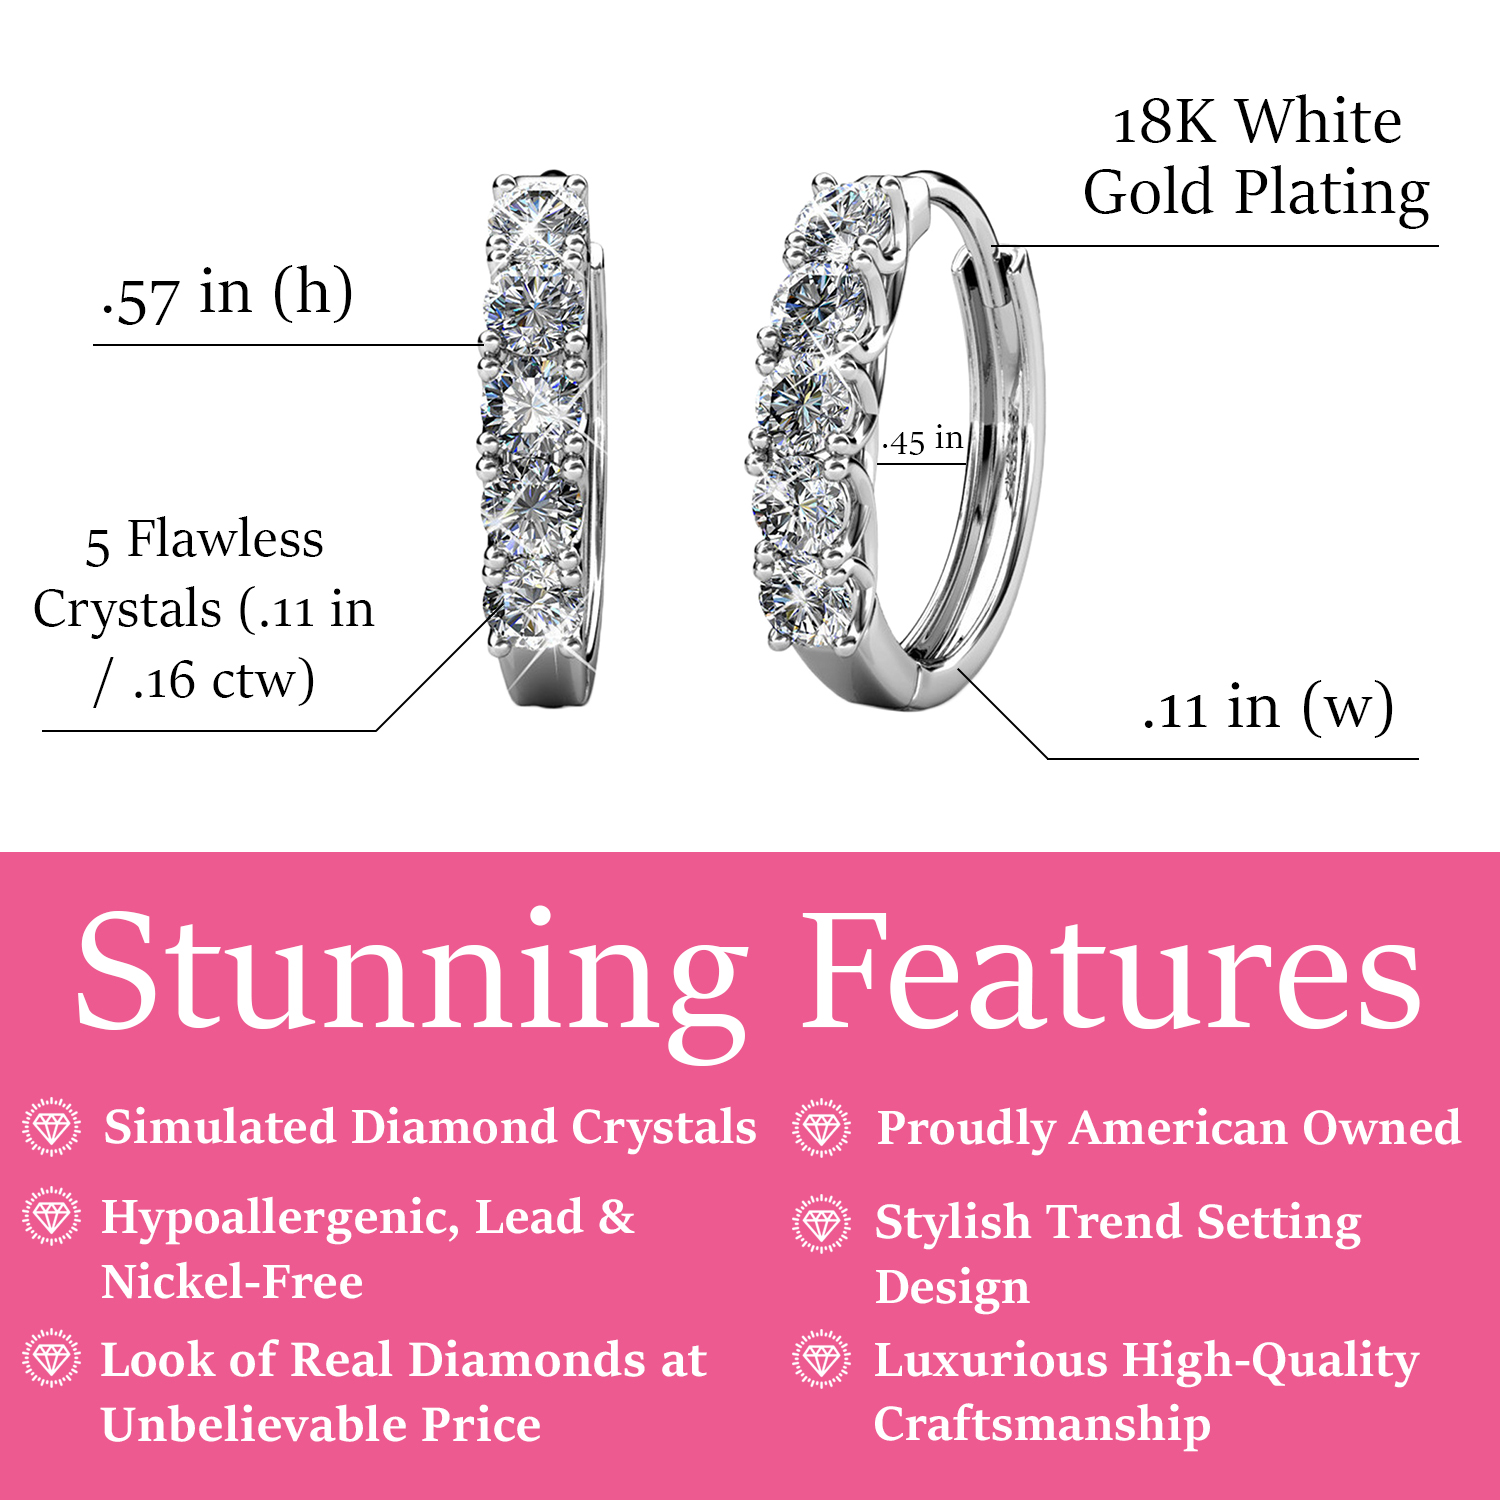 Cate & Chloe Bethany 18k White Gold Plated Silver Hoop Earrings | Women's Crystal Earrings, Jewelry Gift - image 3 of 8